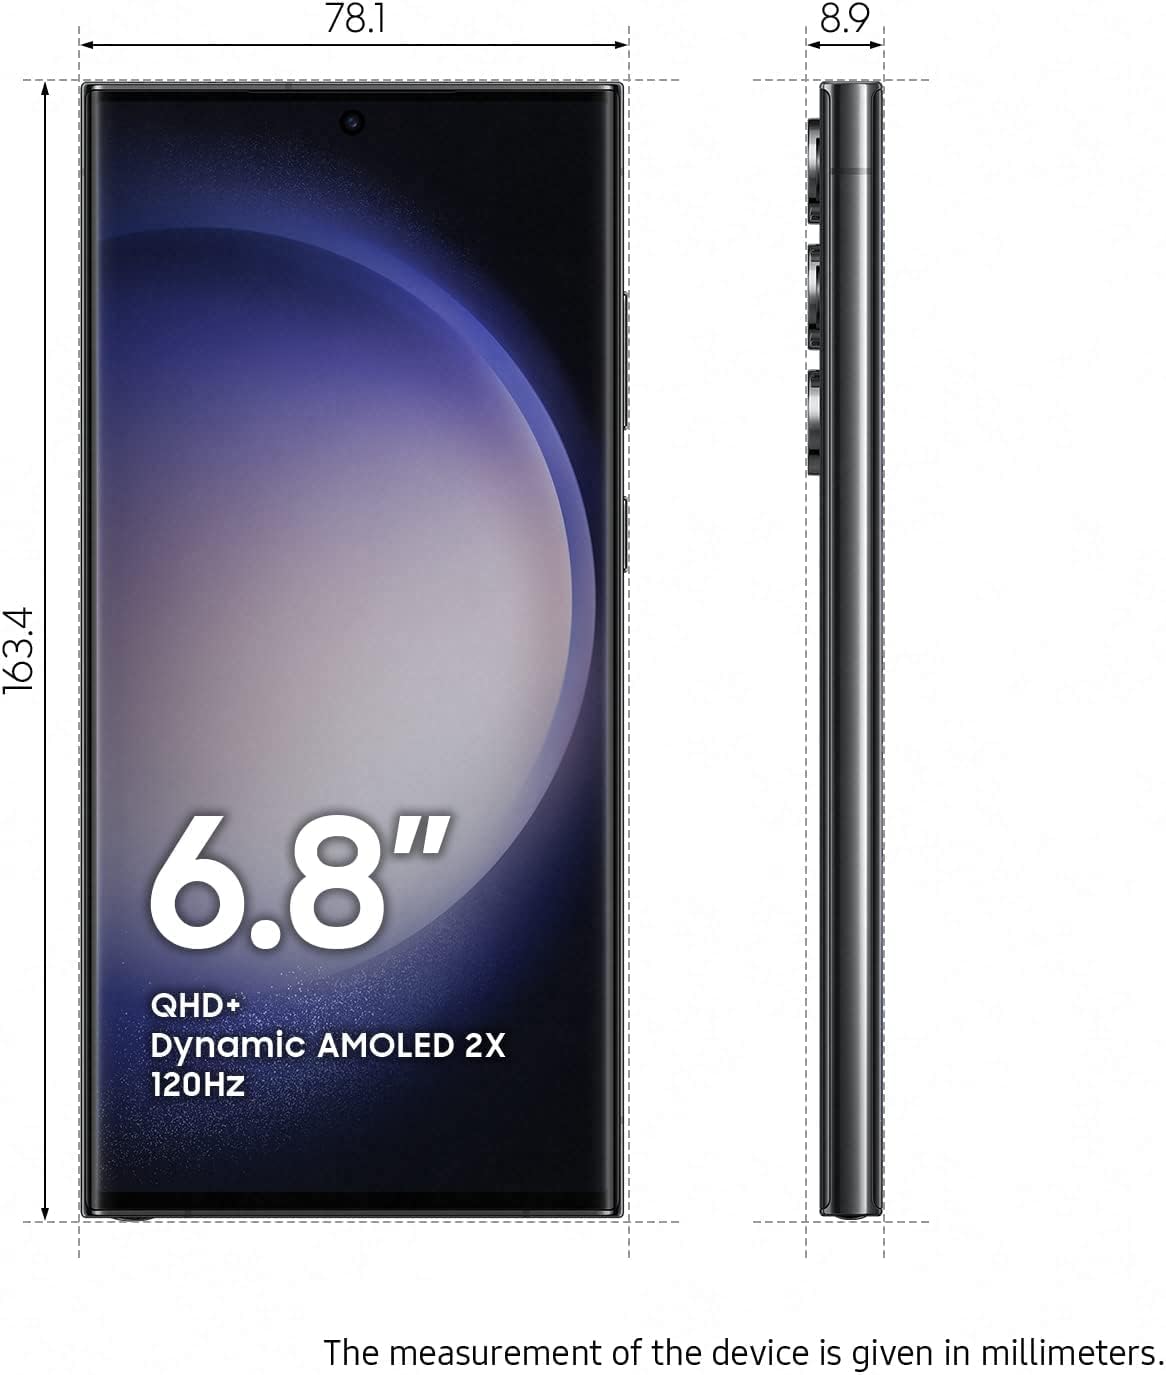 SAMSUNG Galaxy S23 Ultra 5G S9180 Dual 256GB 12GB RAM, 200 MP Camera, Factory Unlocked, NGP Wireless Charger Included – Phantom Black